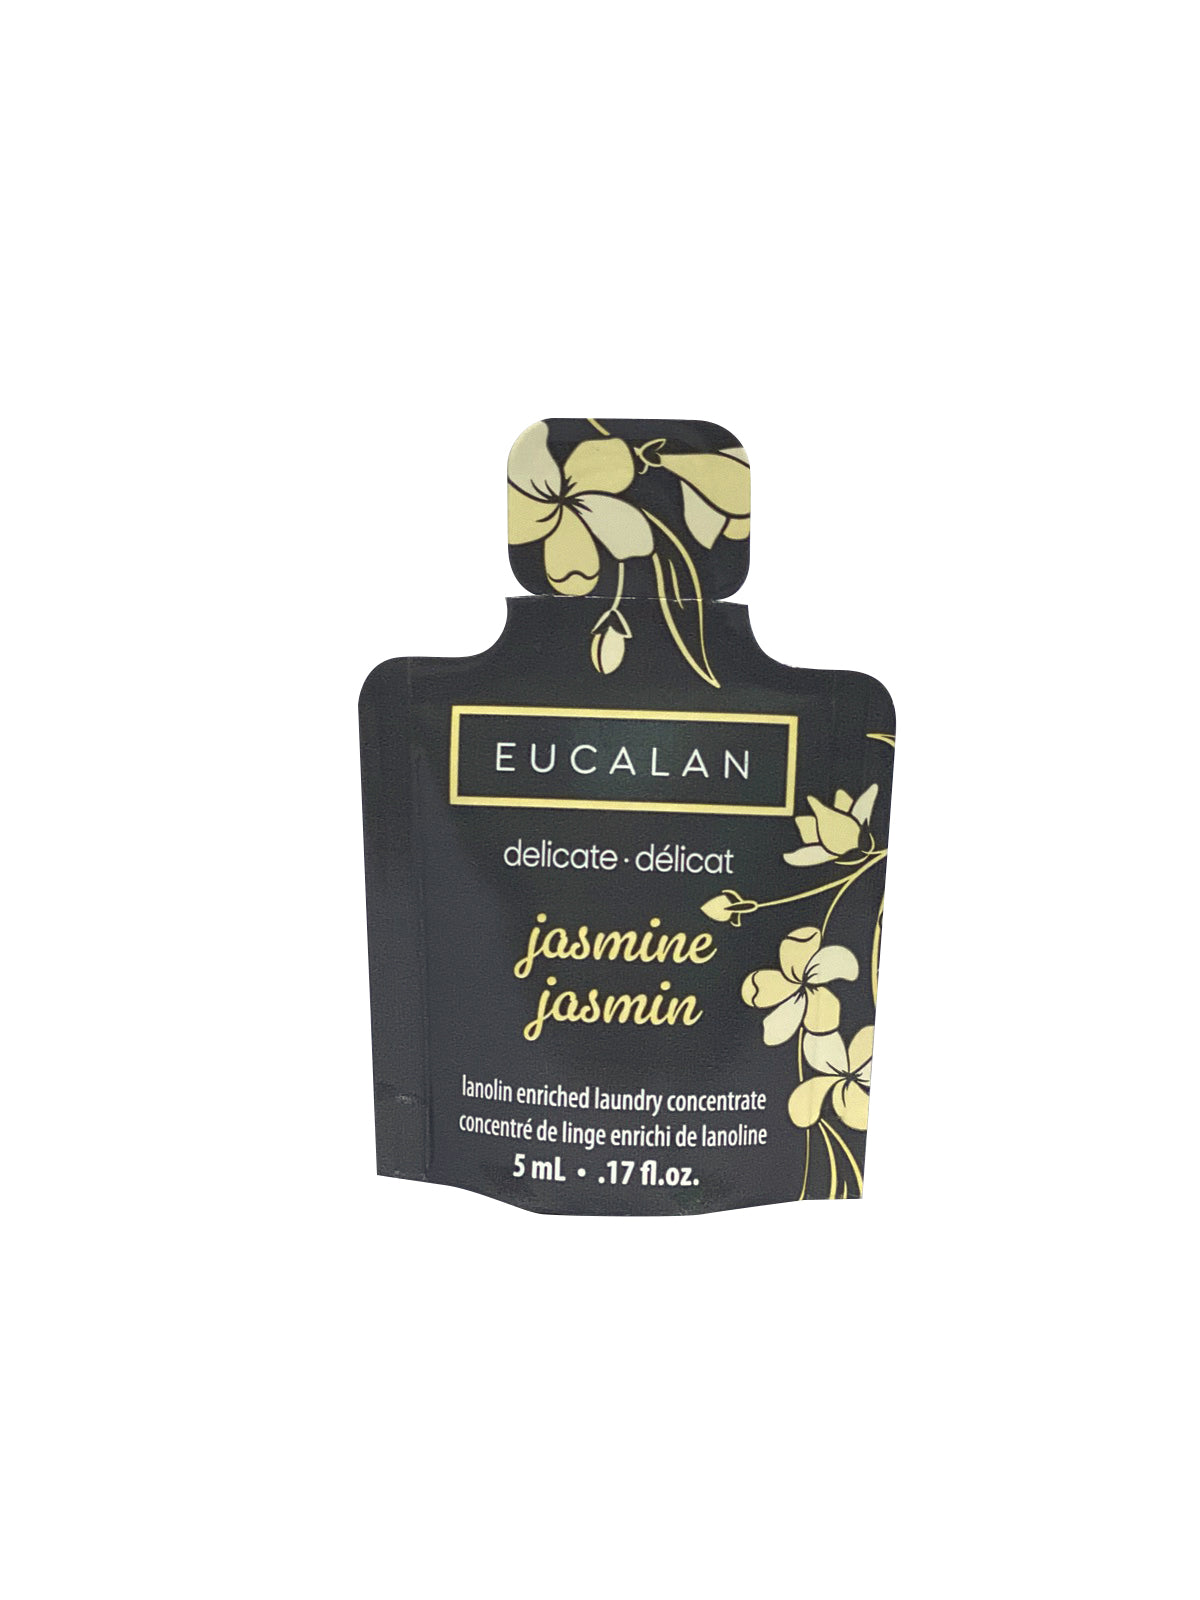 Single use packet of Eucalan Jasmine